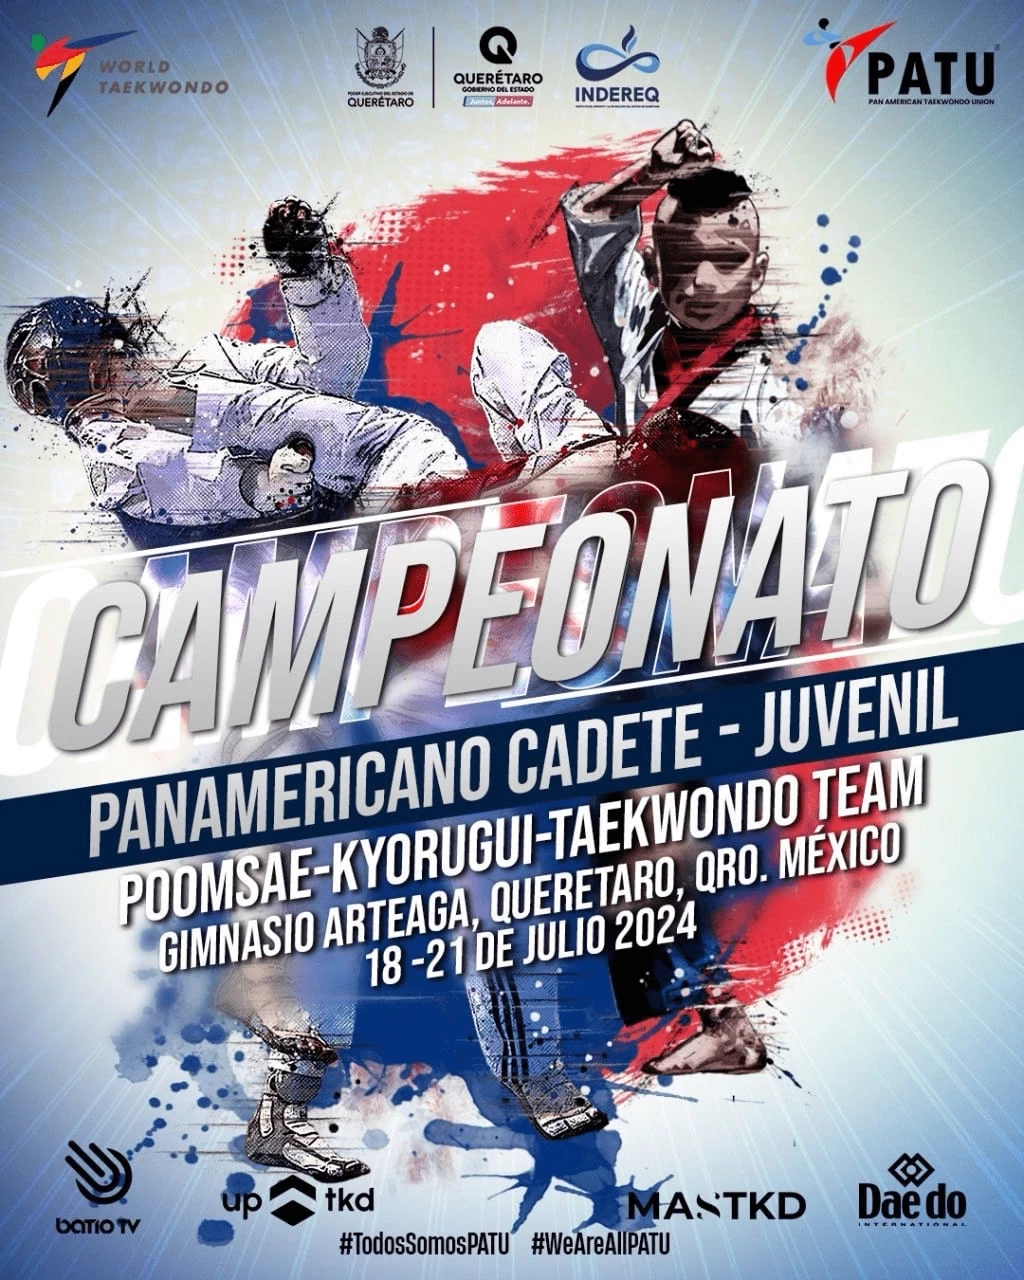 Querétaro ready for 2024 Pan American Cadet and Junior Taekwondo Championships